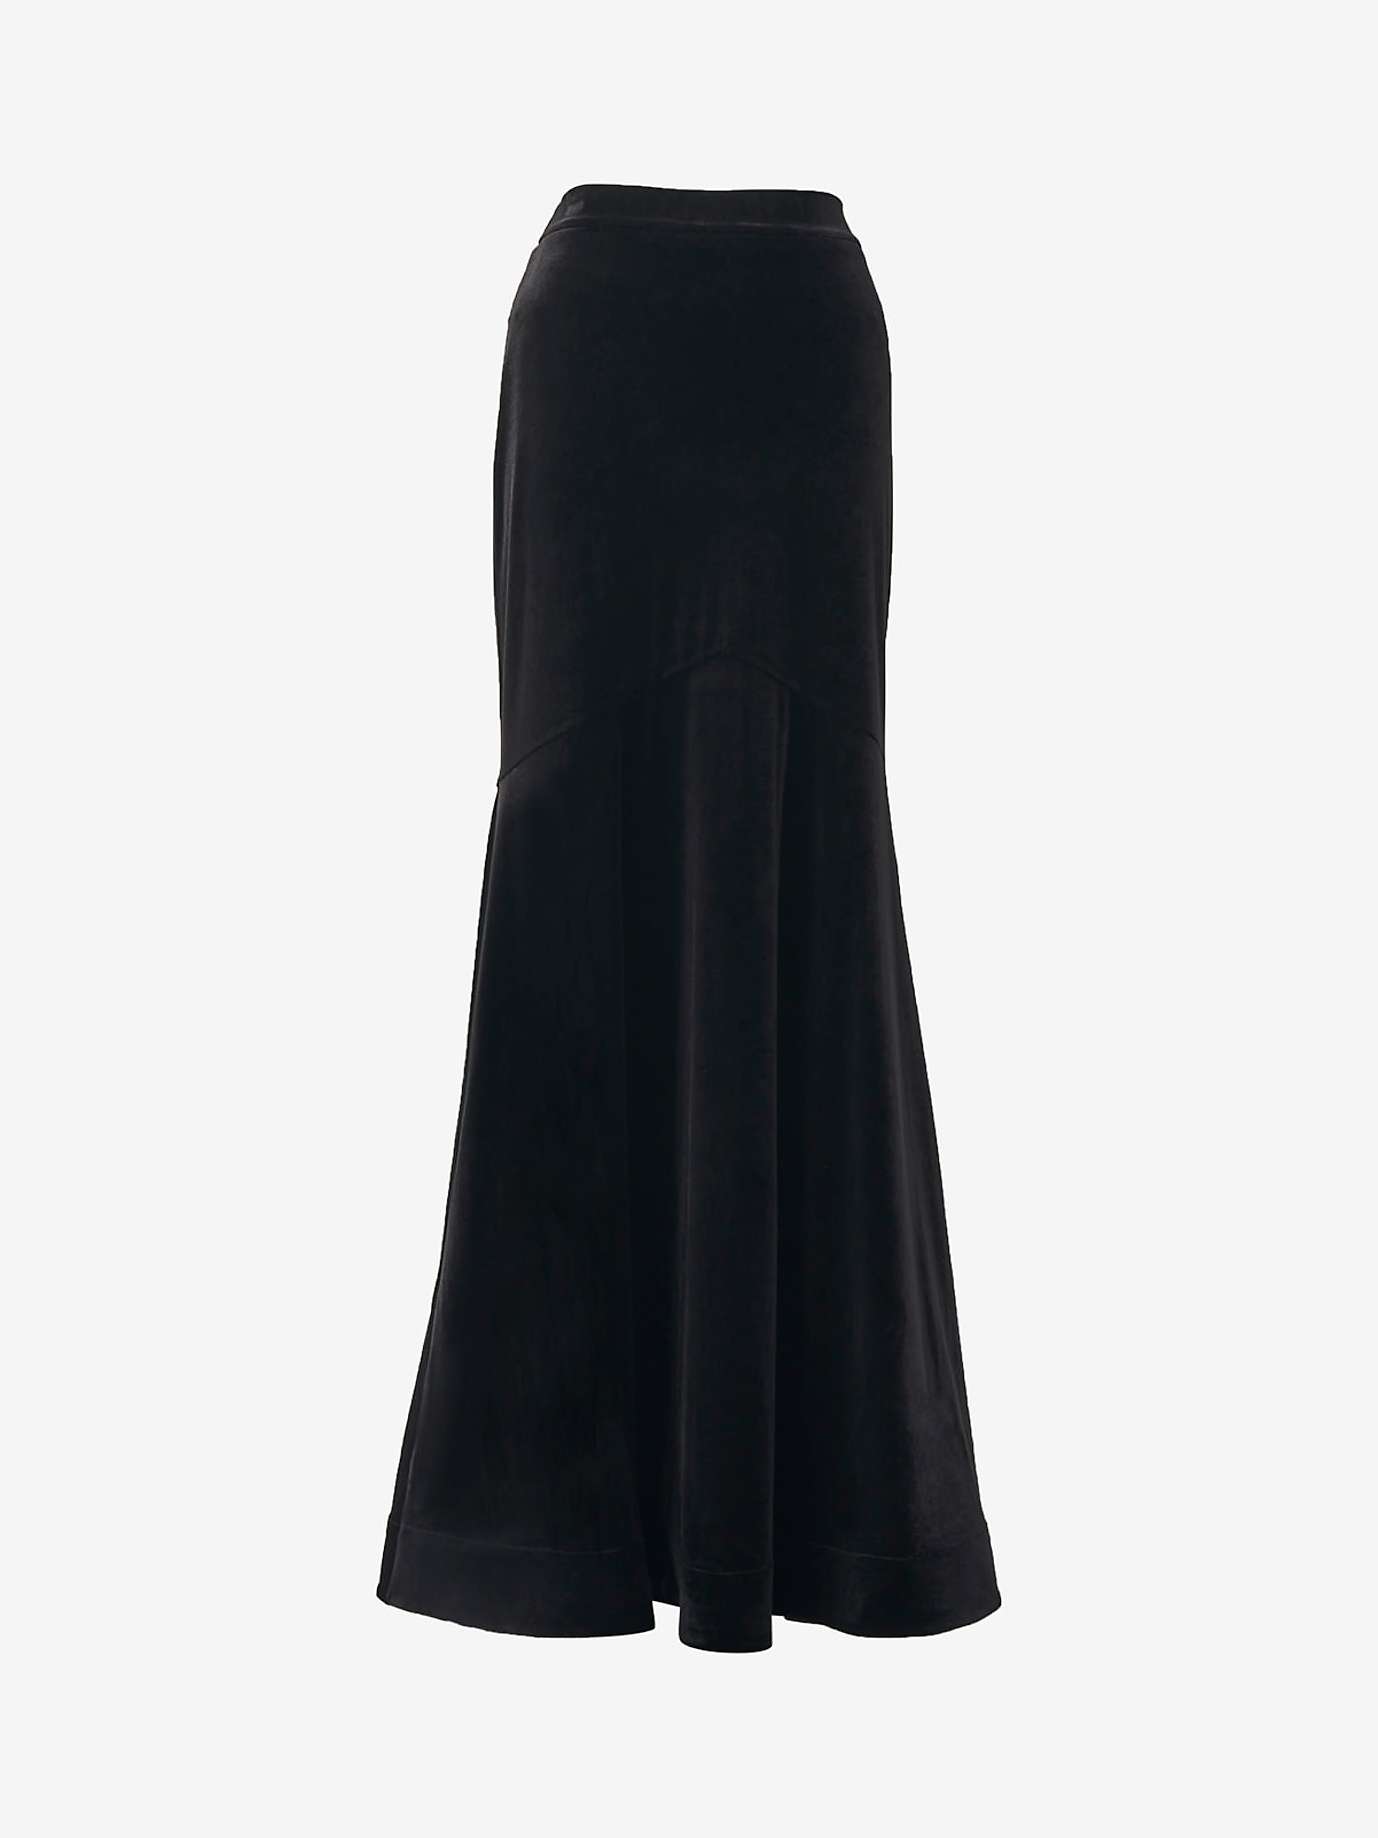 Adrianna Papell Stretch Velvet Maxi Skirt, Black at John Lewis & Partners